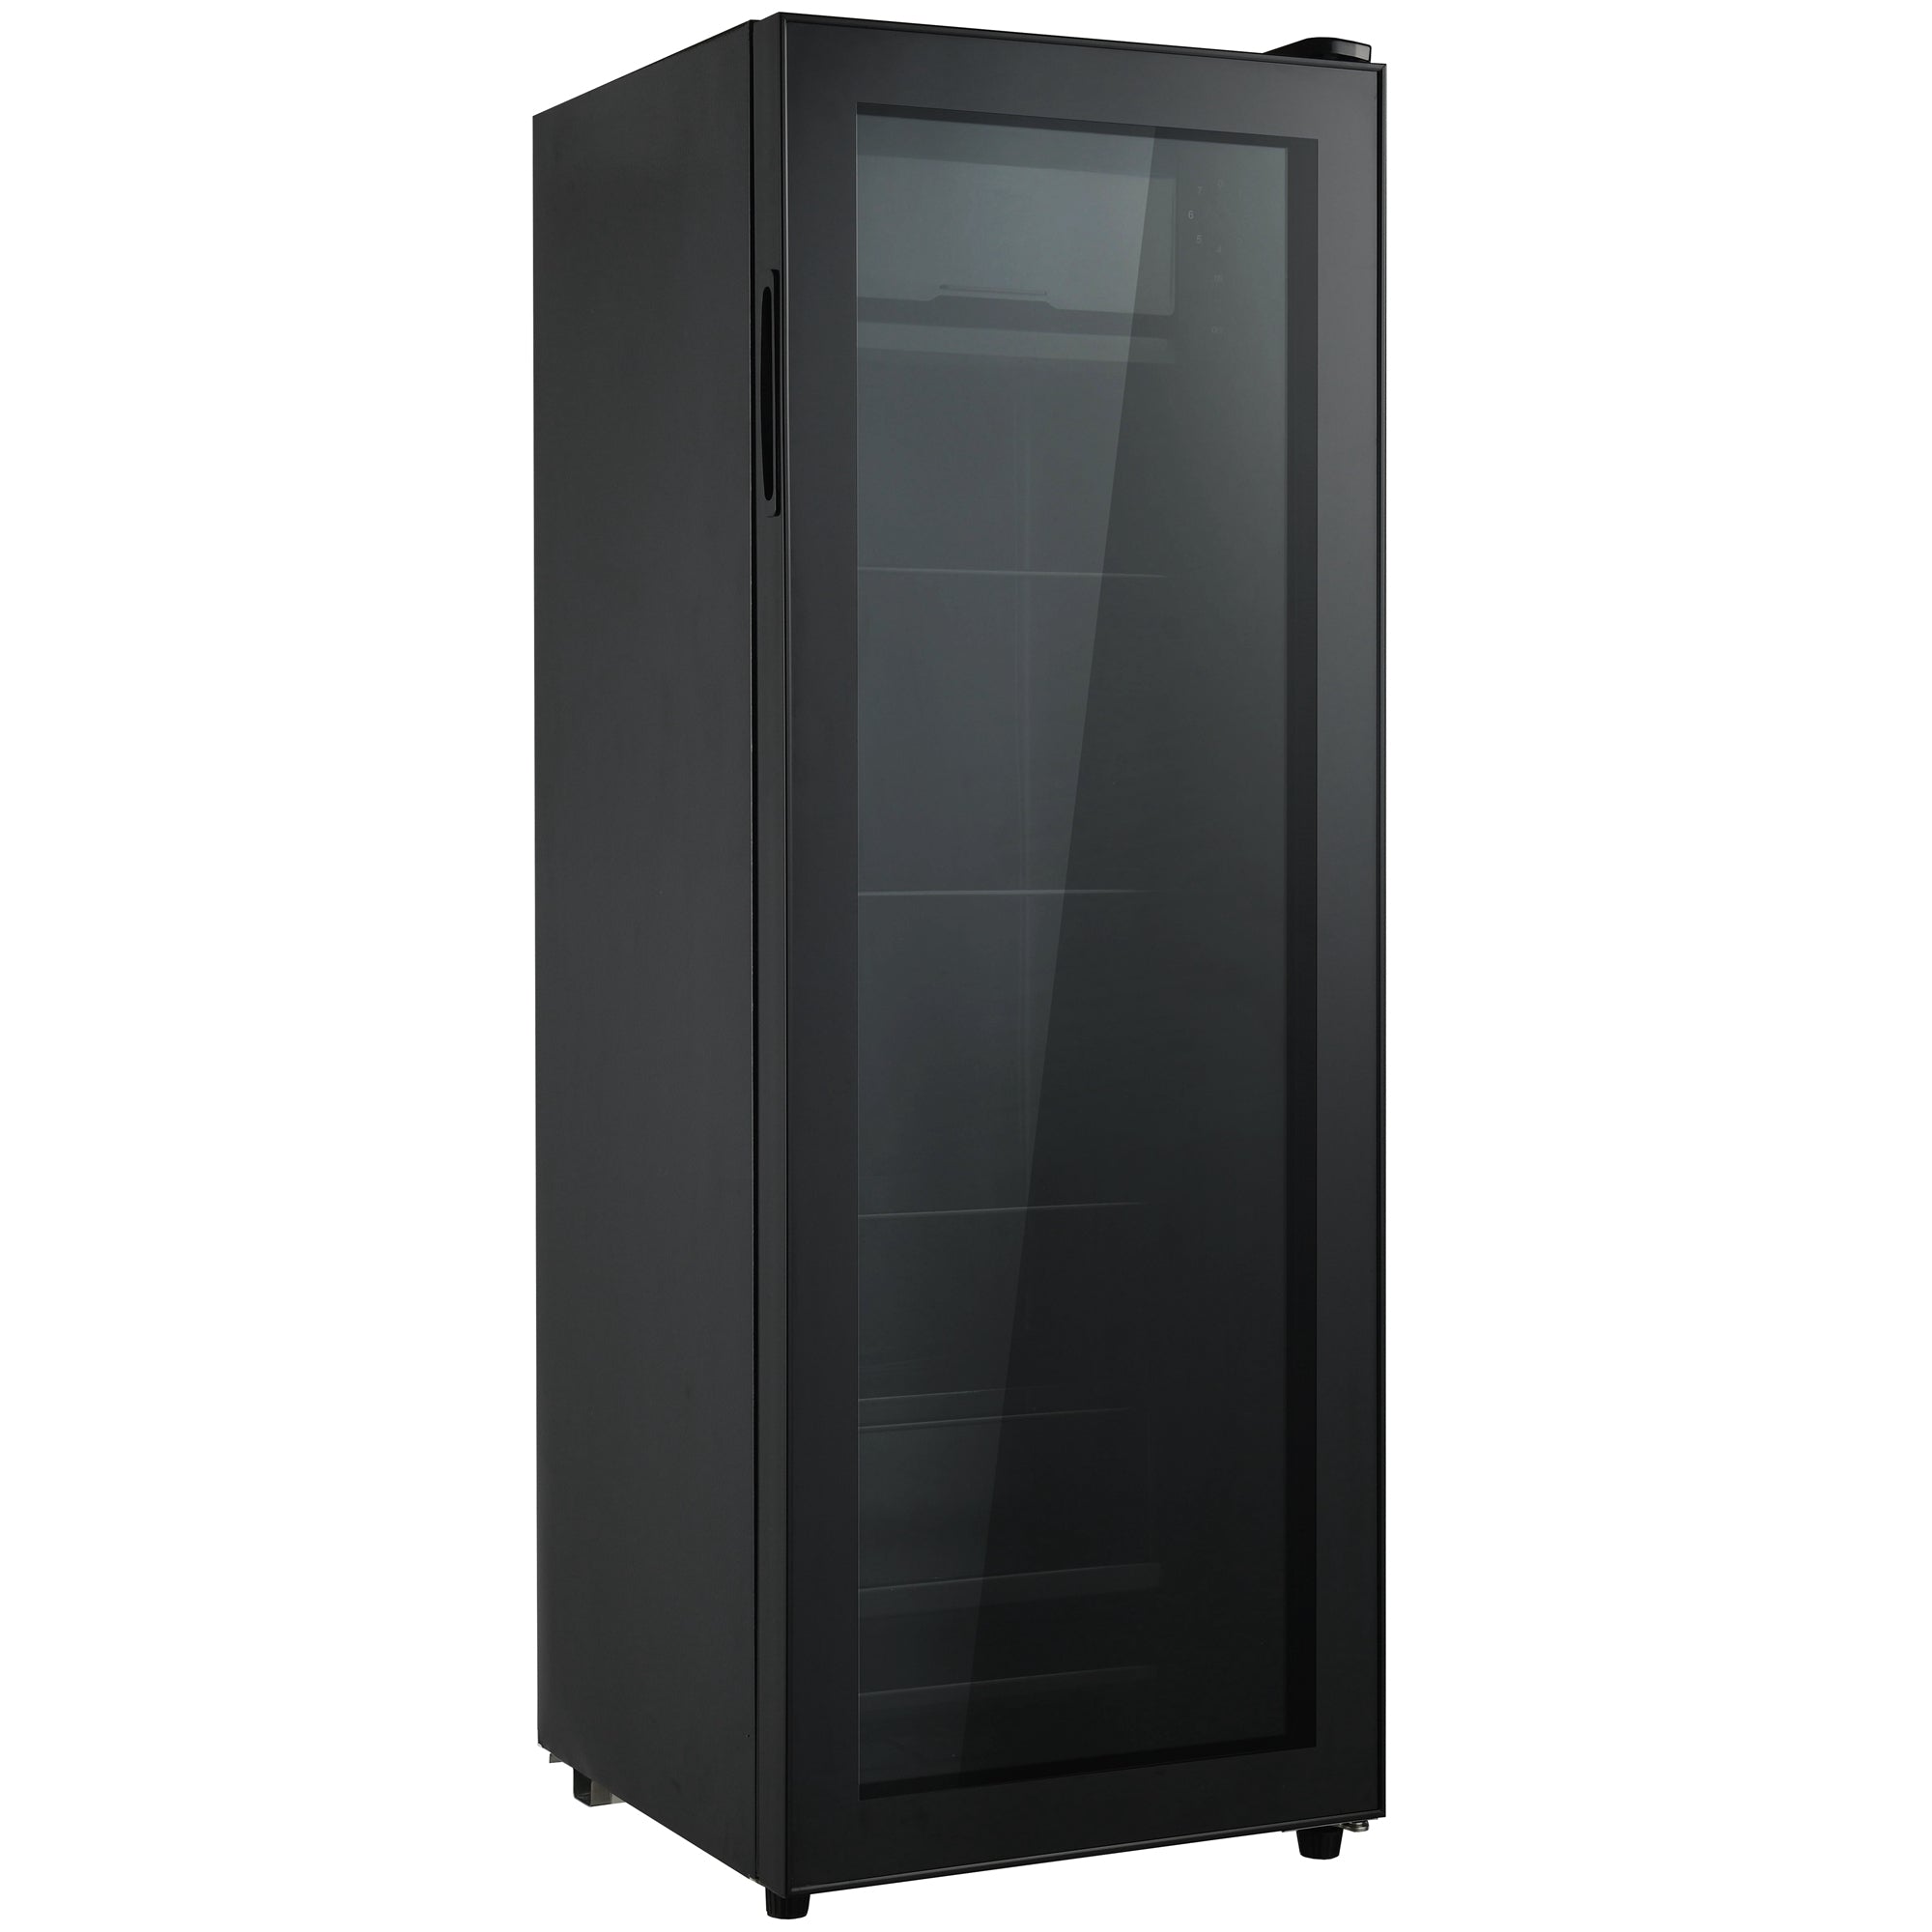 4.5Cu.ft mini fridge, 0.3Cu.ft freezer, up to 94 cans black-iron